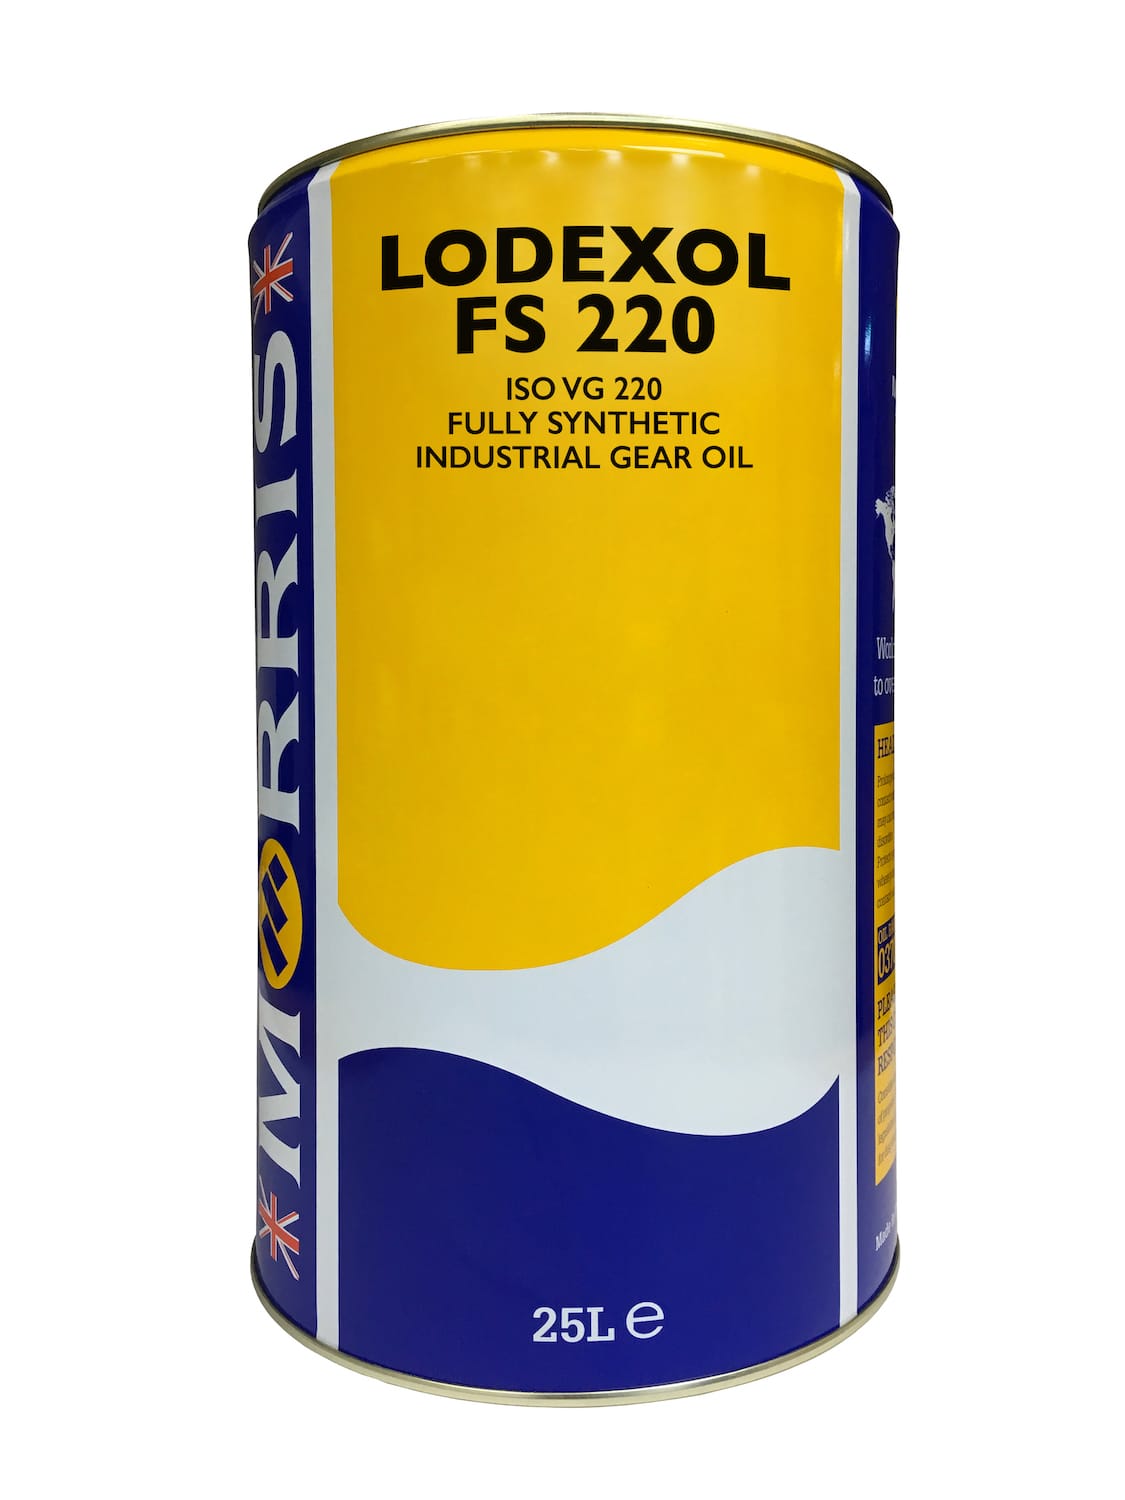 Lodexol FS 220